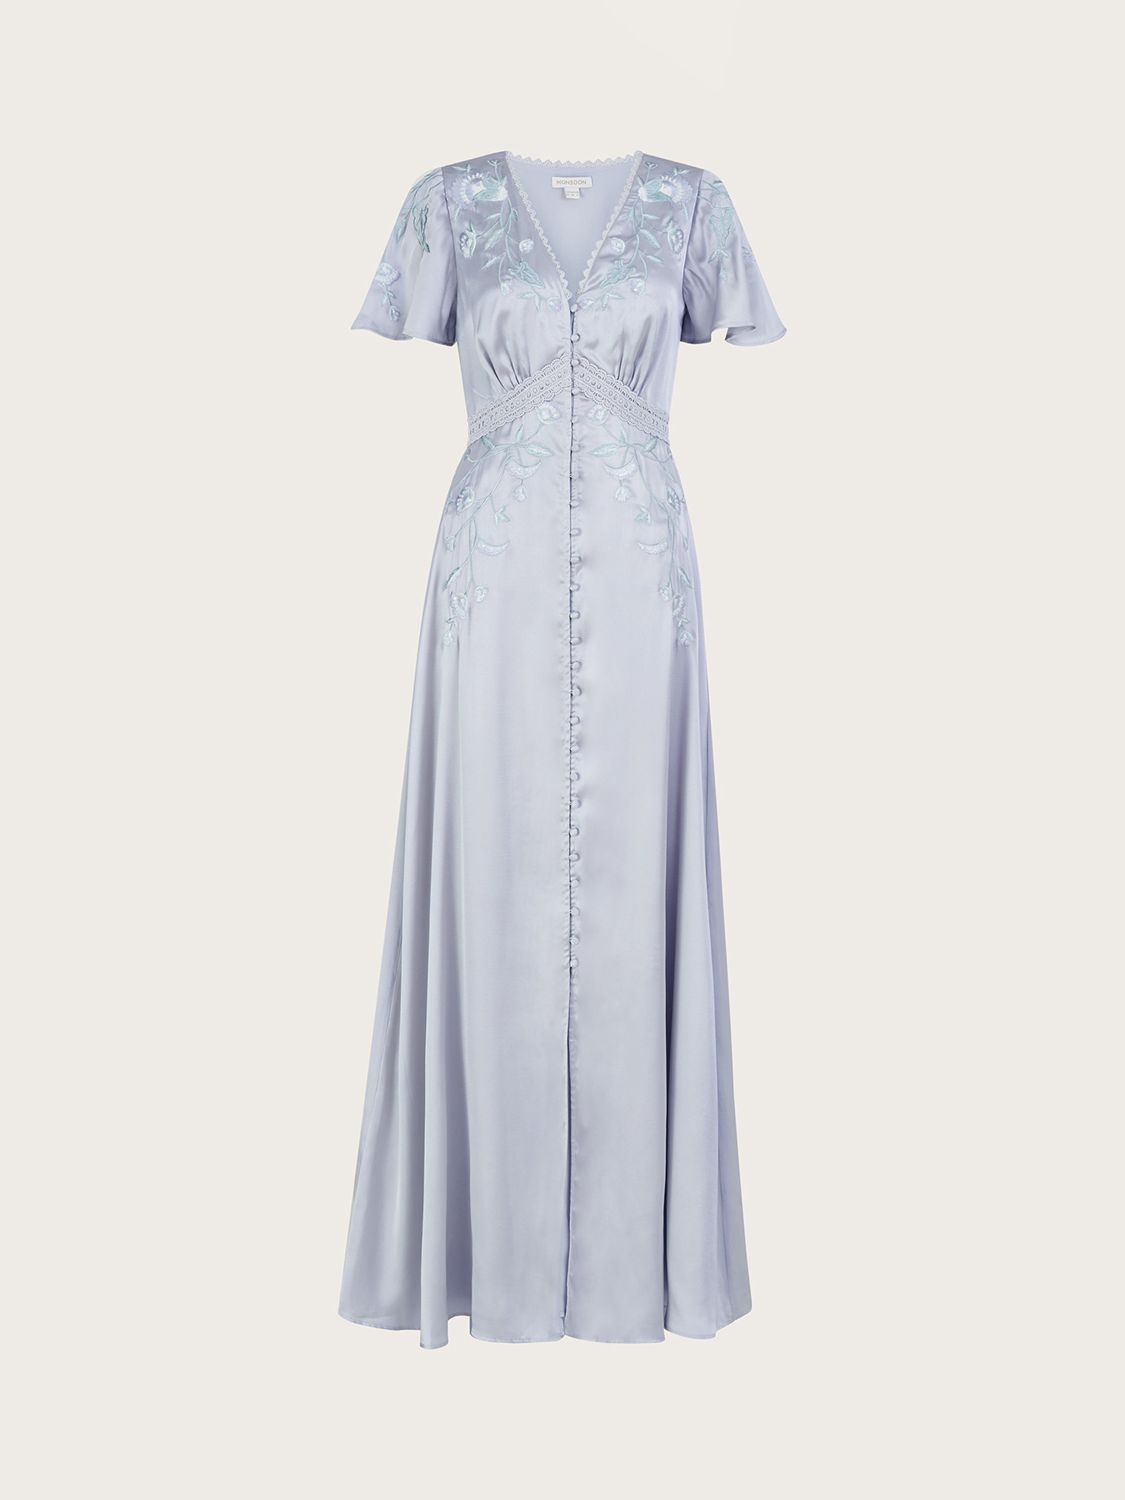 Monsoon Mia Satin Embroidered Maxi Dress, Silver, 6